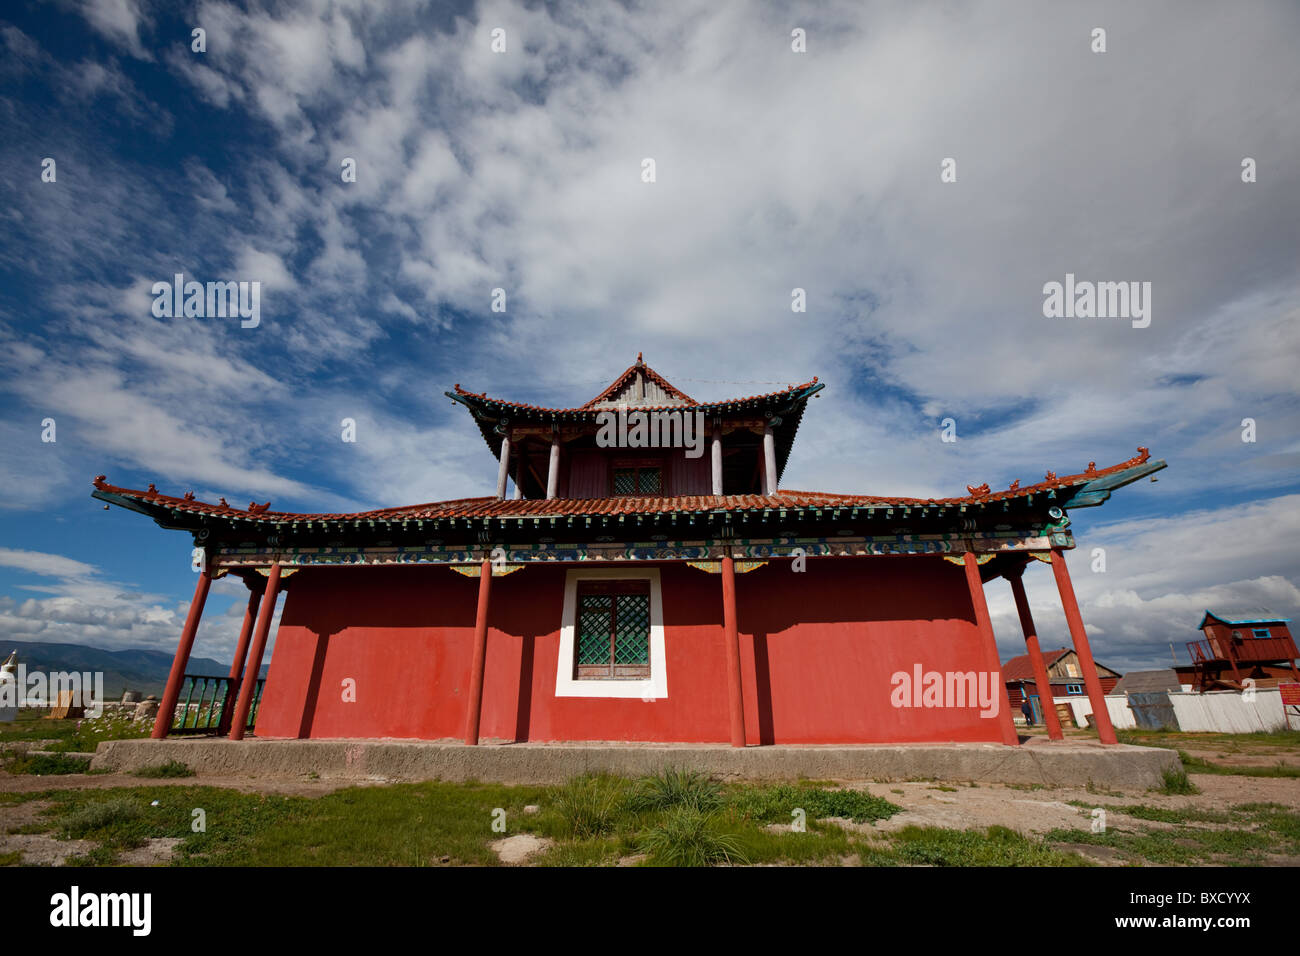 Monastero Buddista Danzandarjaa Khiid in Moron,Khovsgol provincia,Nort Mongolia Foto Stock